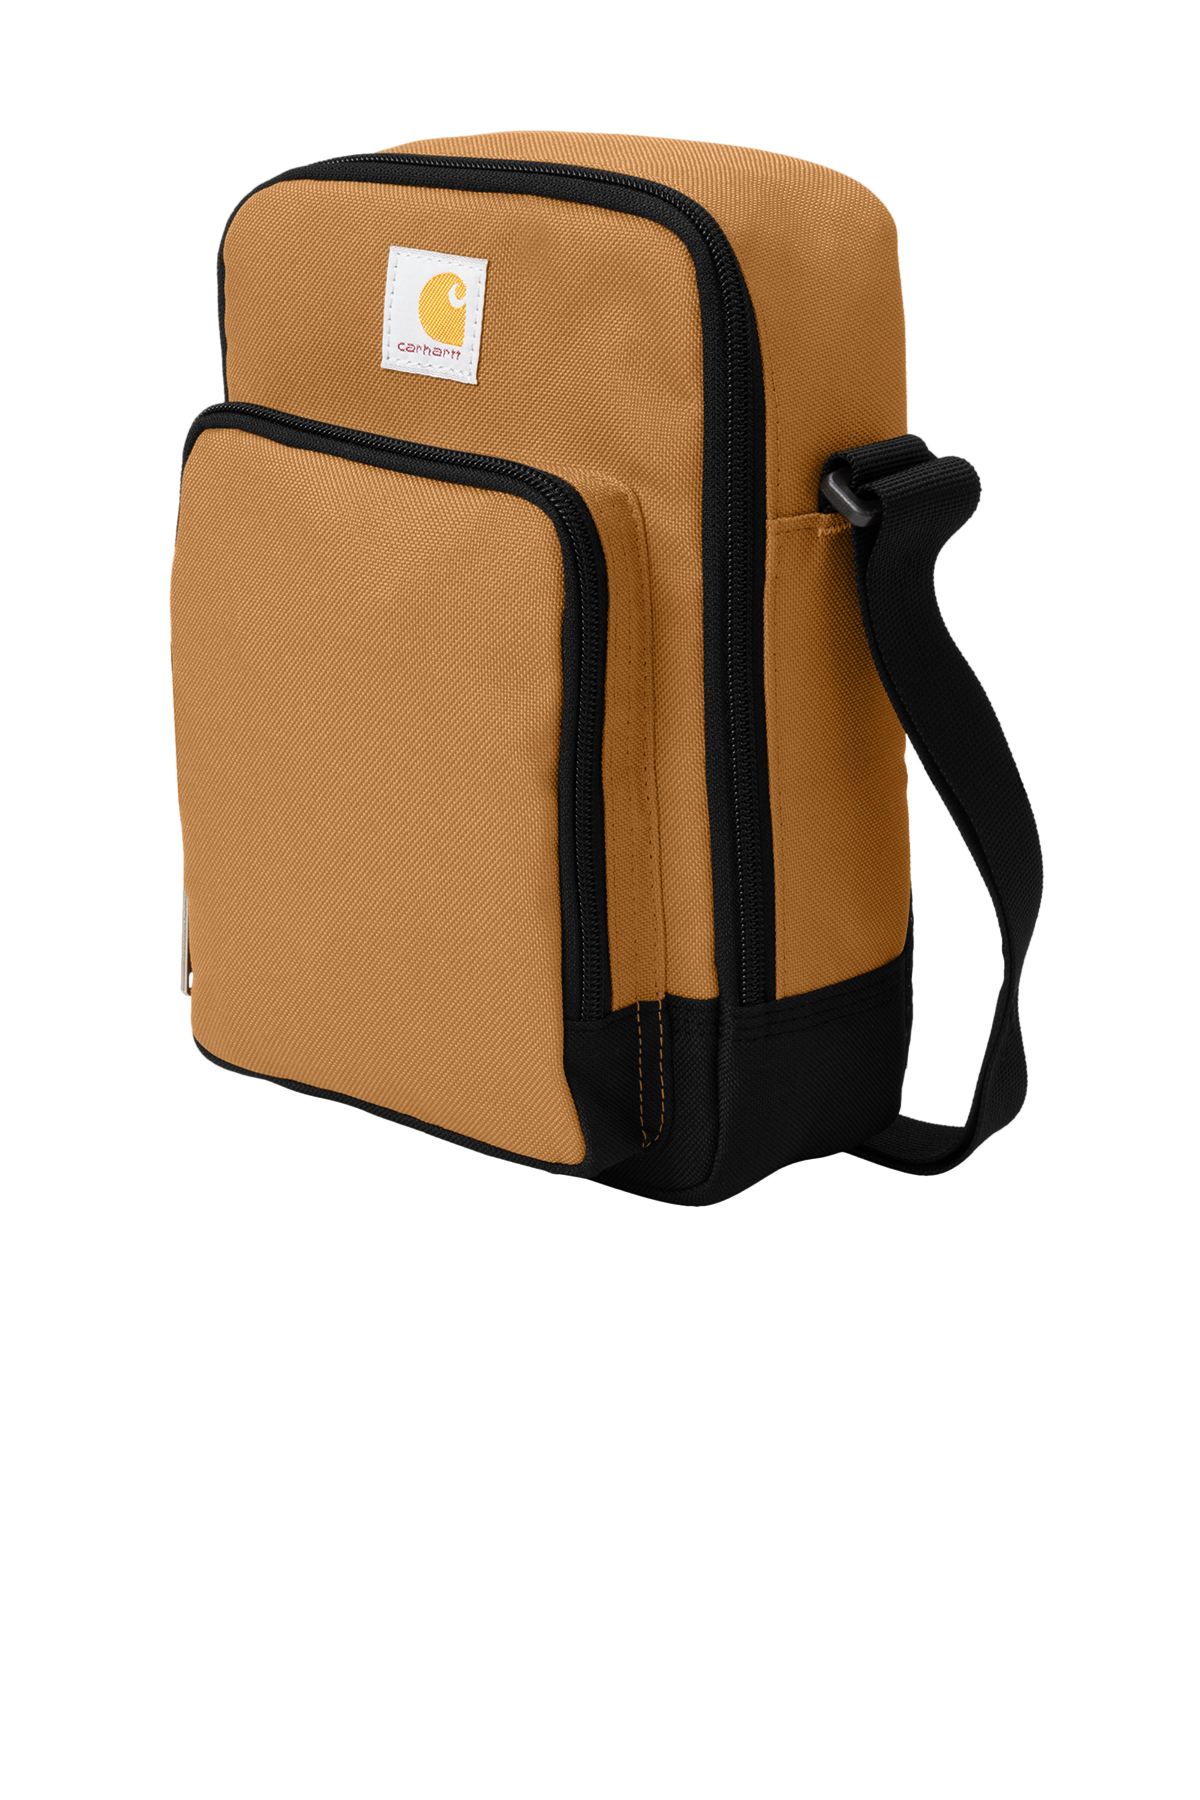 Carhartt shoulder bag – Turbo Mart